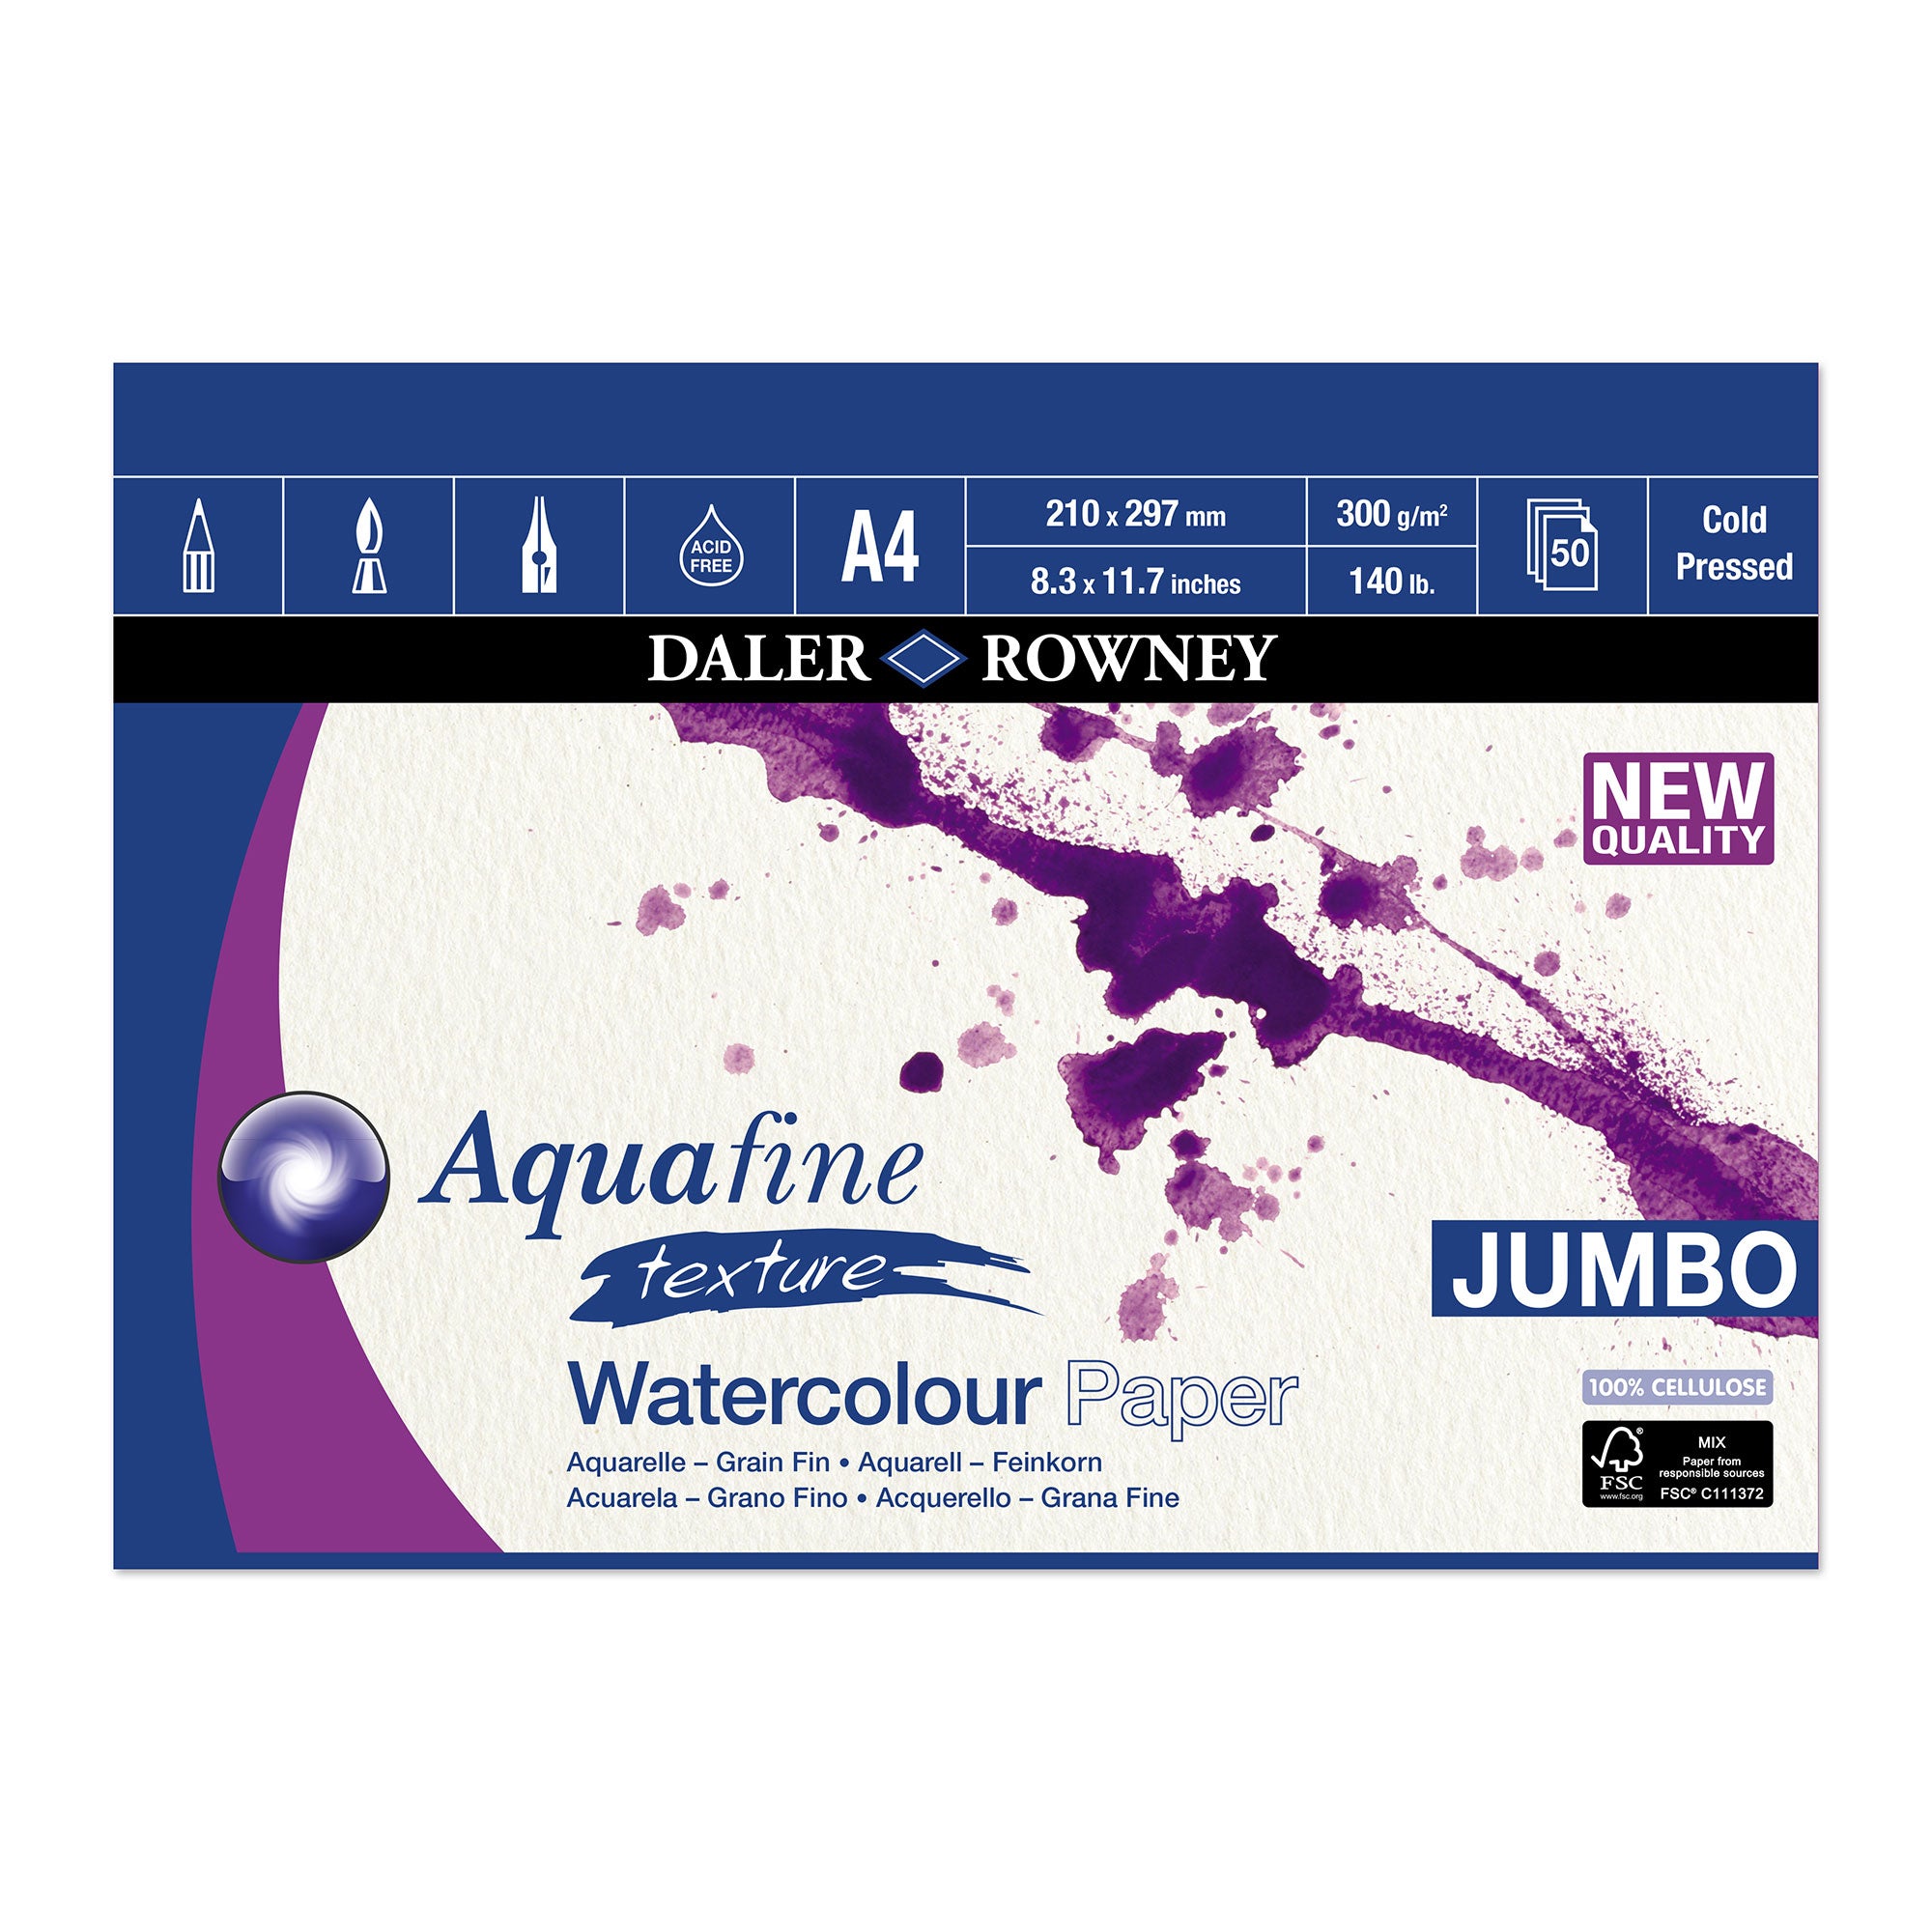 Daler-Rowney Aquafine JUMBO Watercolour Pads - 300gsm (140lb) - COLD PRESSED